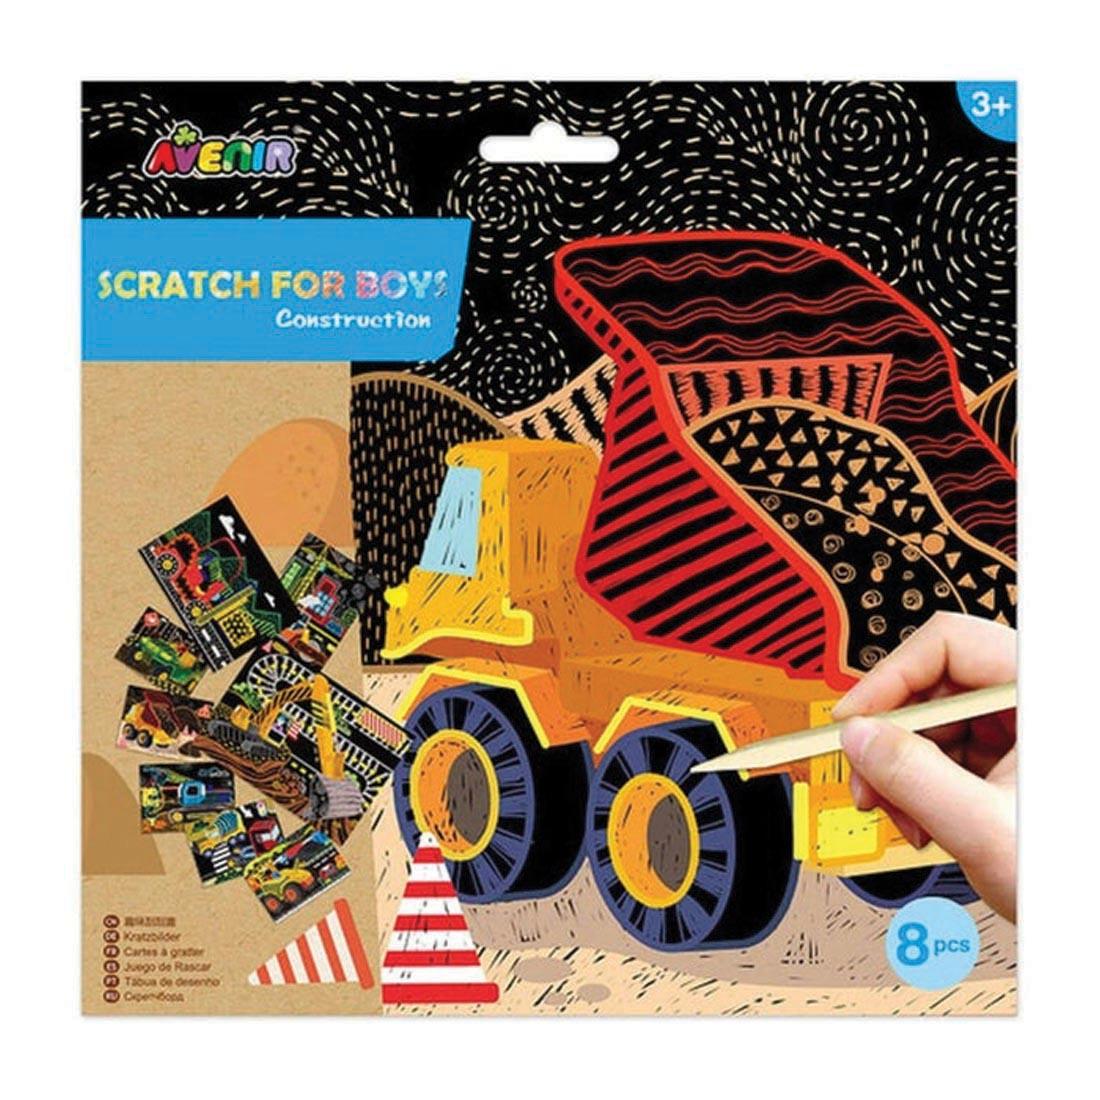 Construction Scratch Junior Scratch Pages by Avenir